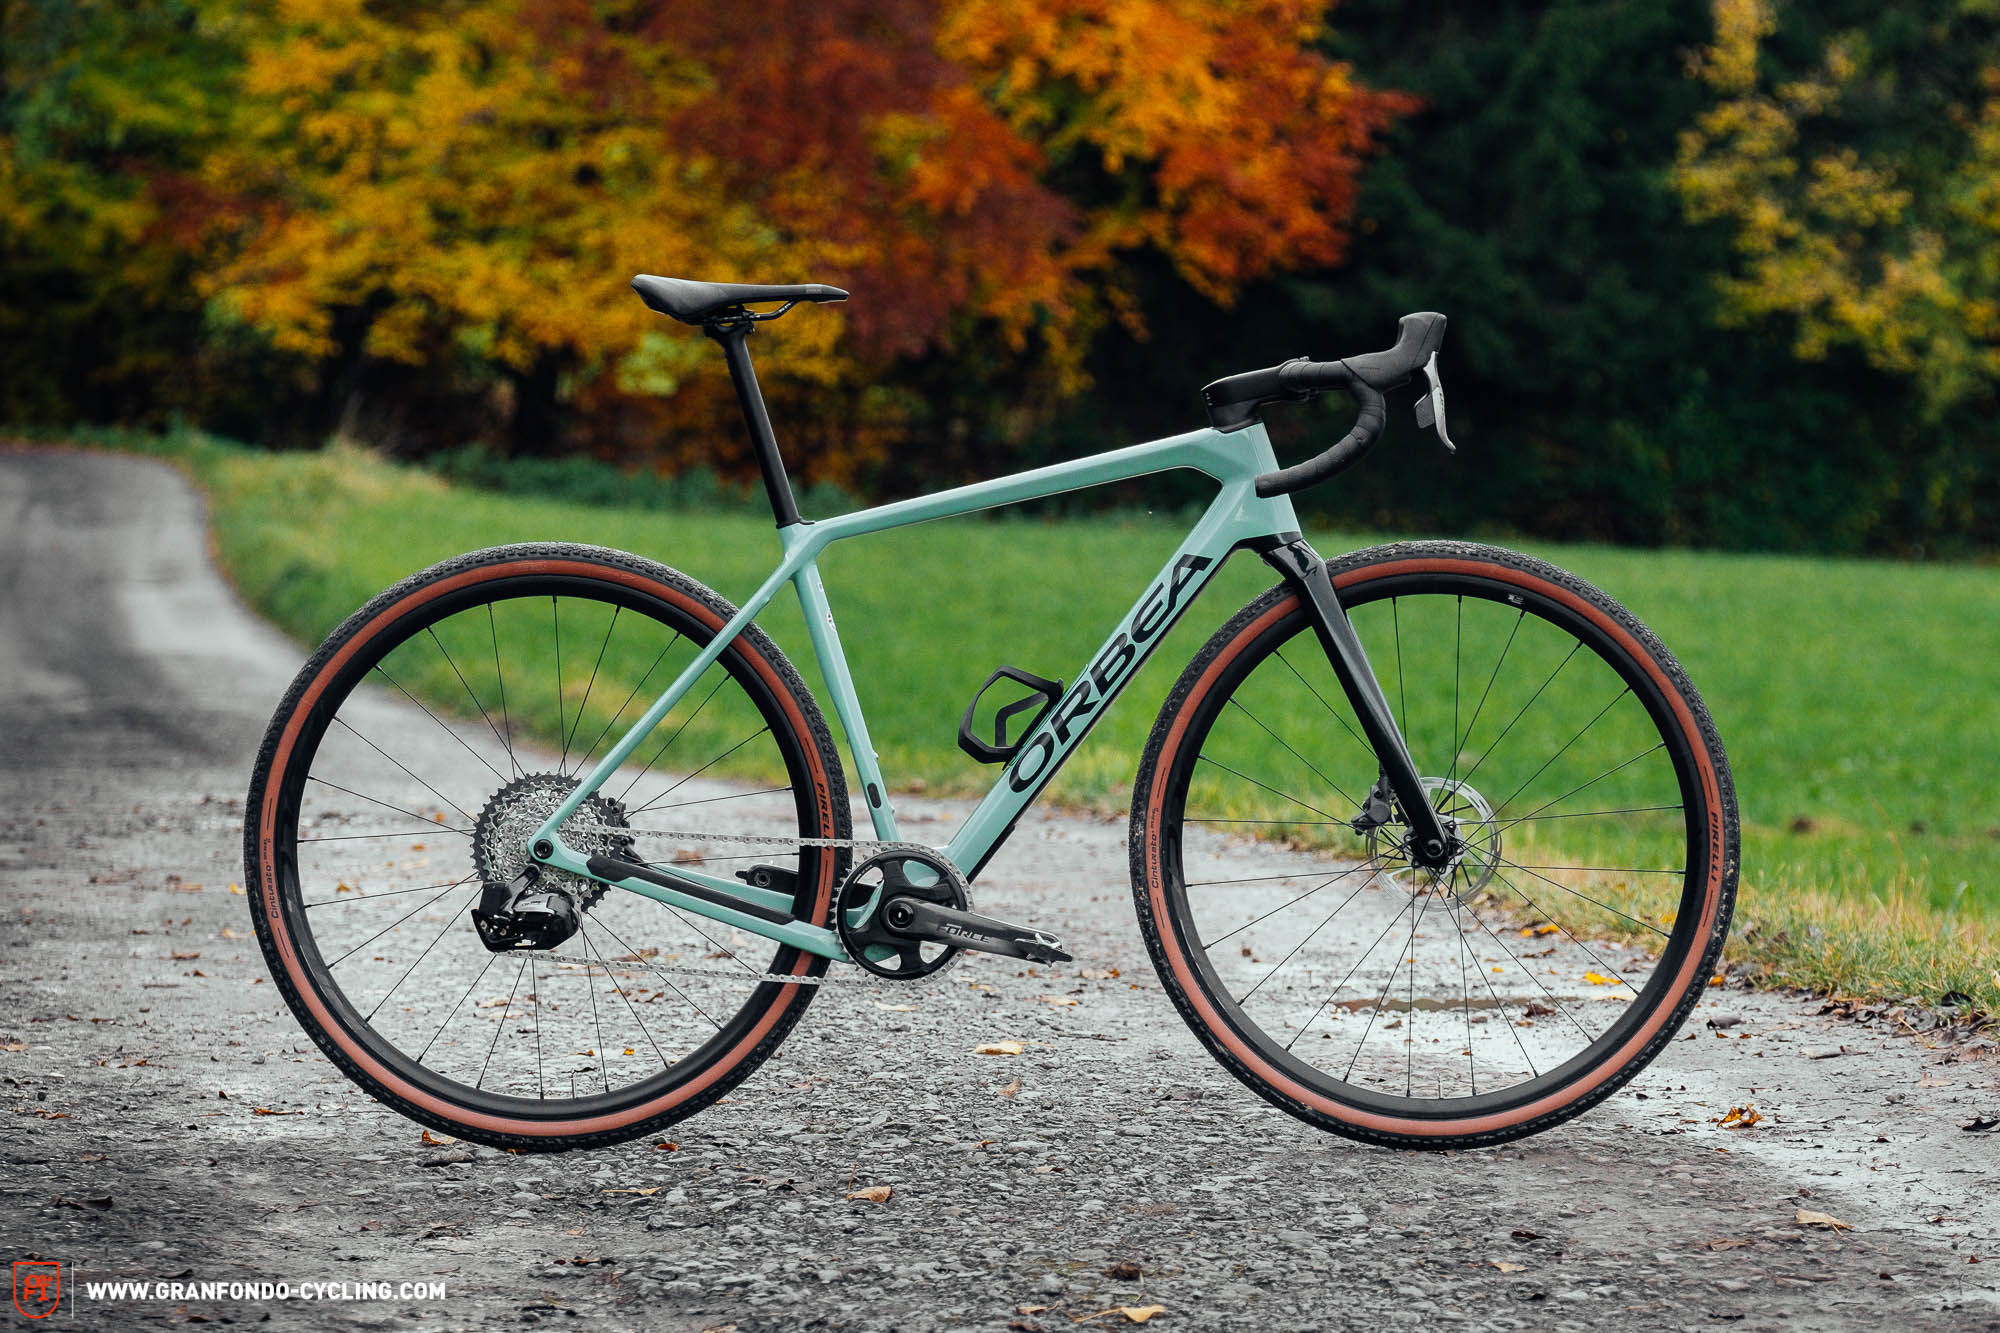 Presenting the 2022 Orbea Terra gravel bike – What's changed?